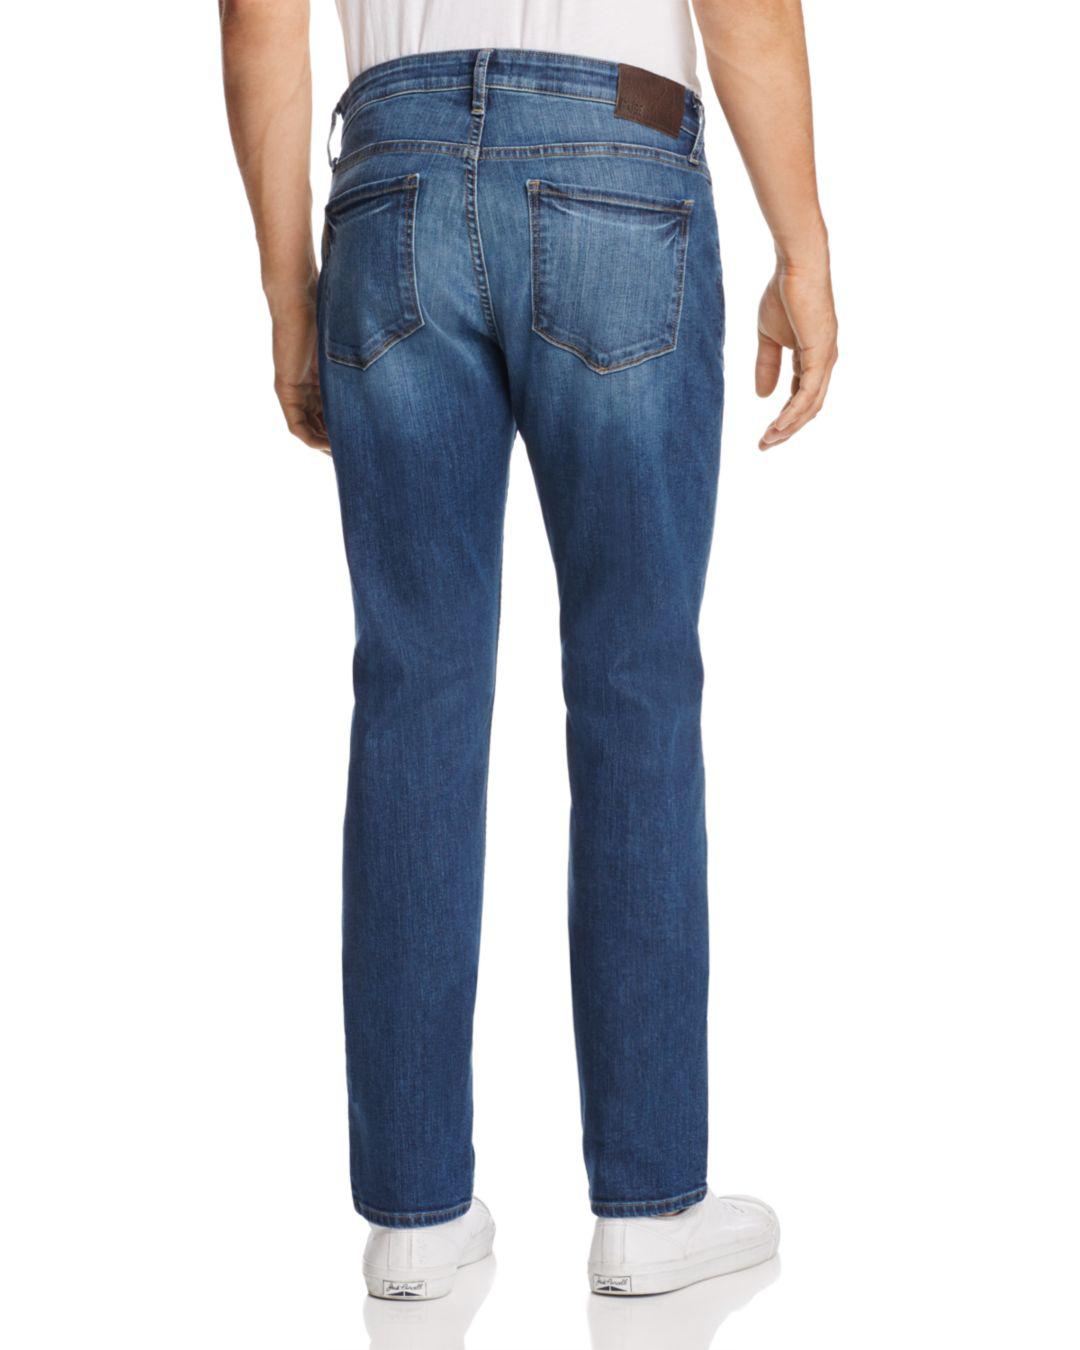 PAIGE Denim Federal Slim Fit Jeans In Indie in Blue for Men - Lyst